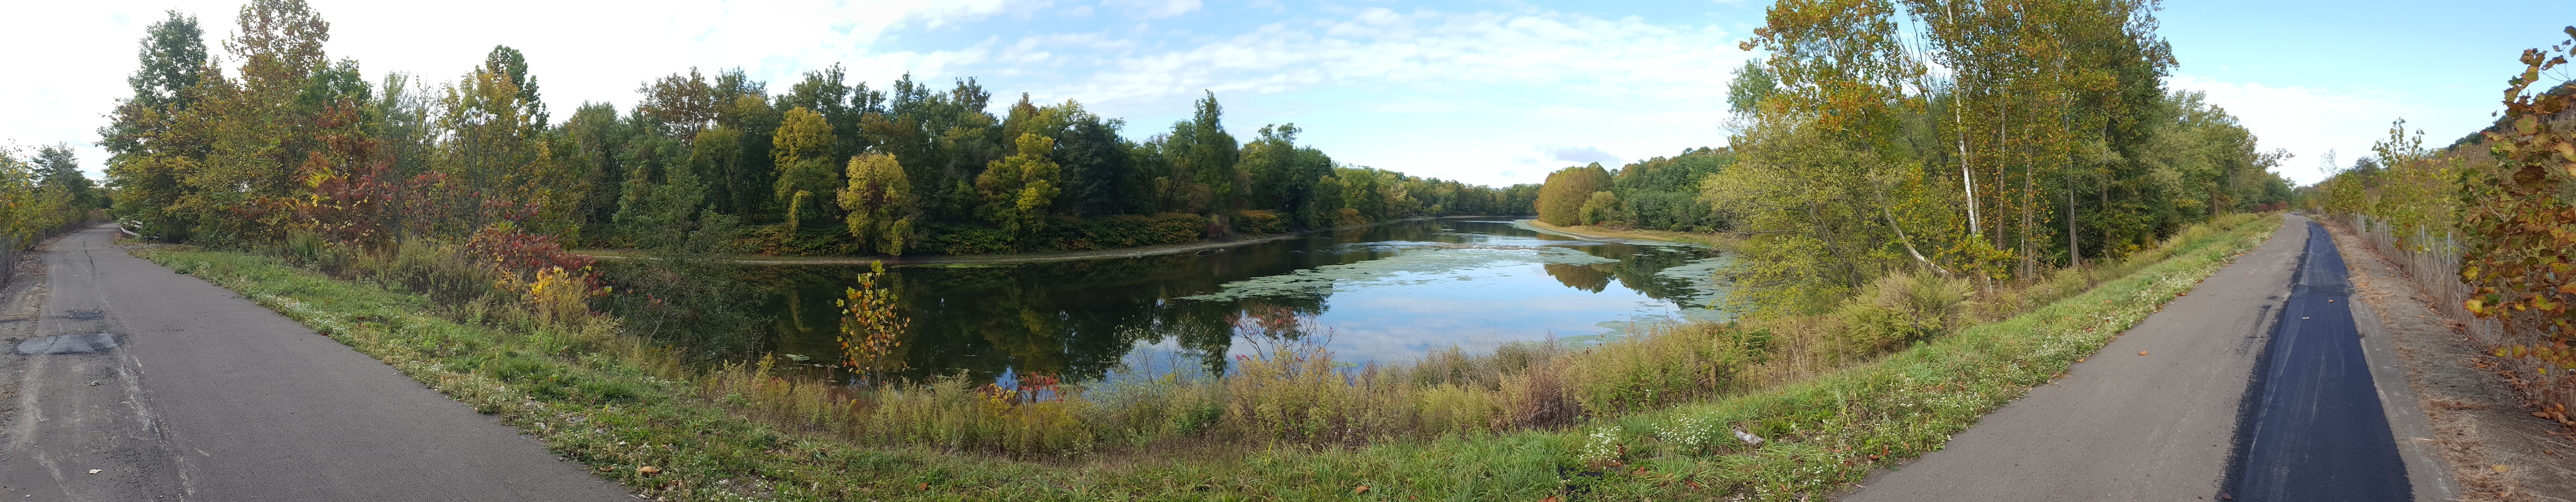 The Chemung River and Lackawanna Rail Trail, Elmira, NY